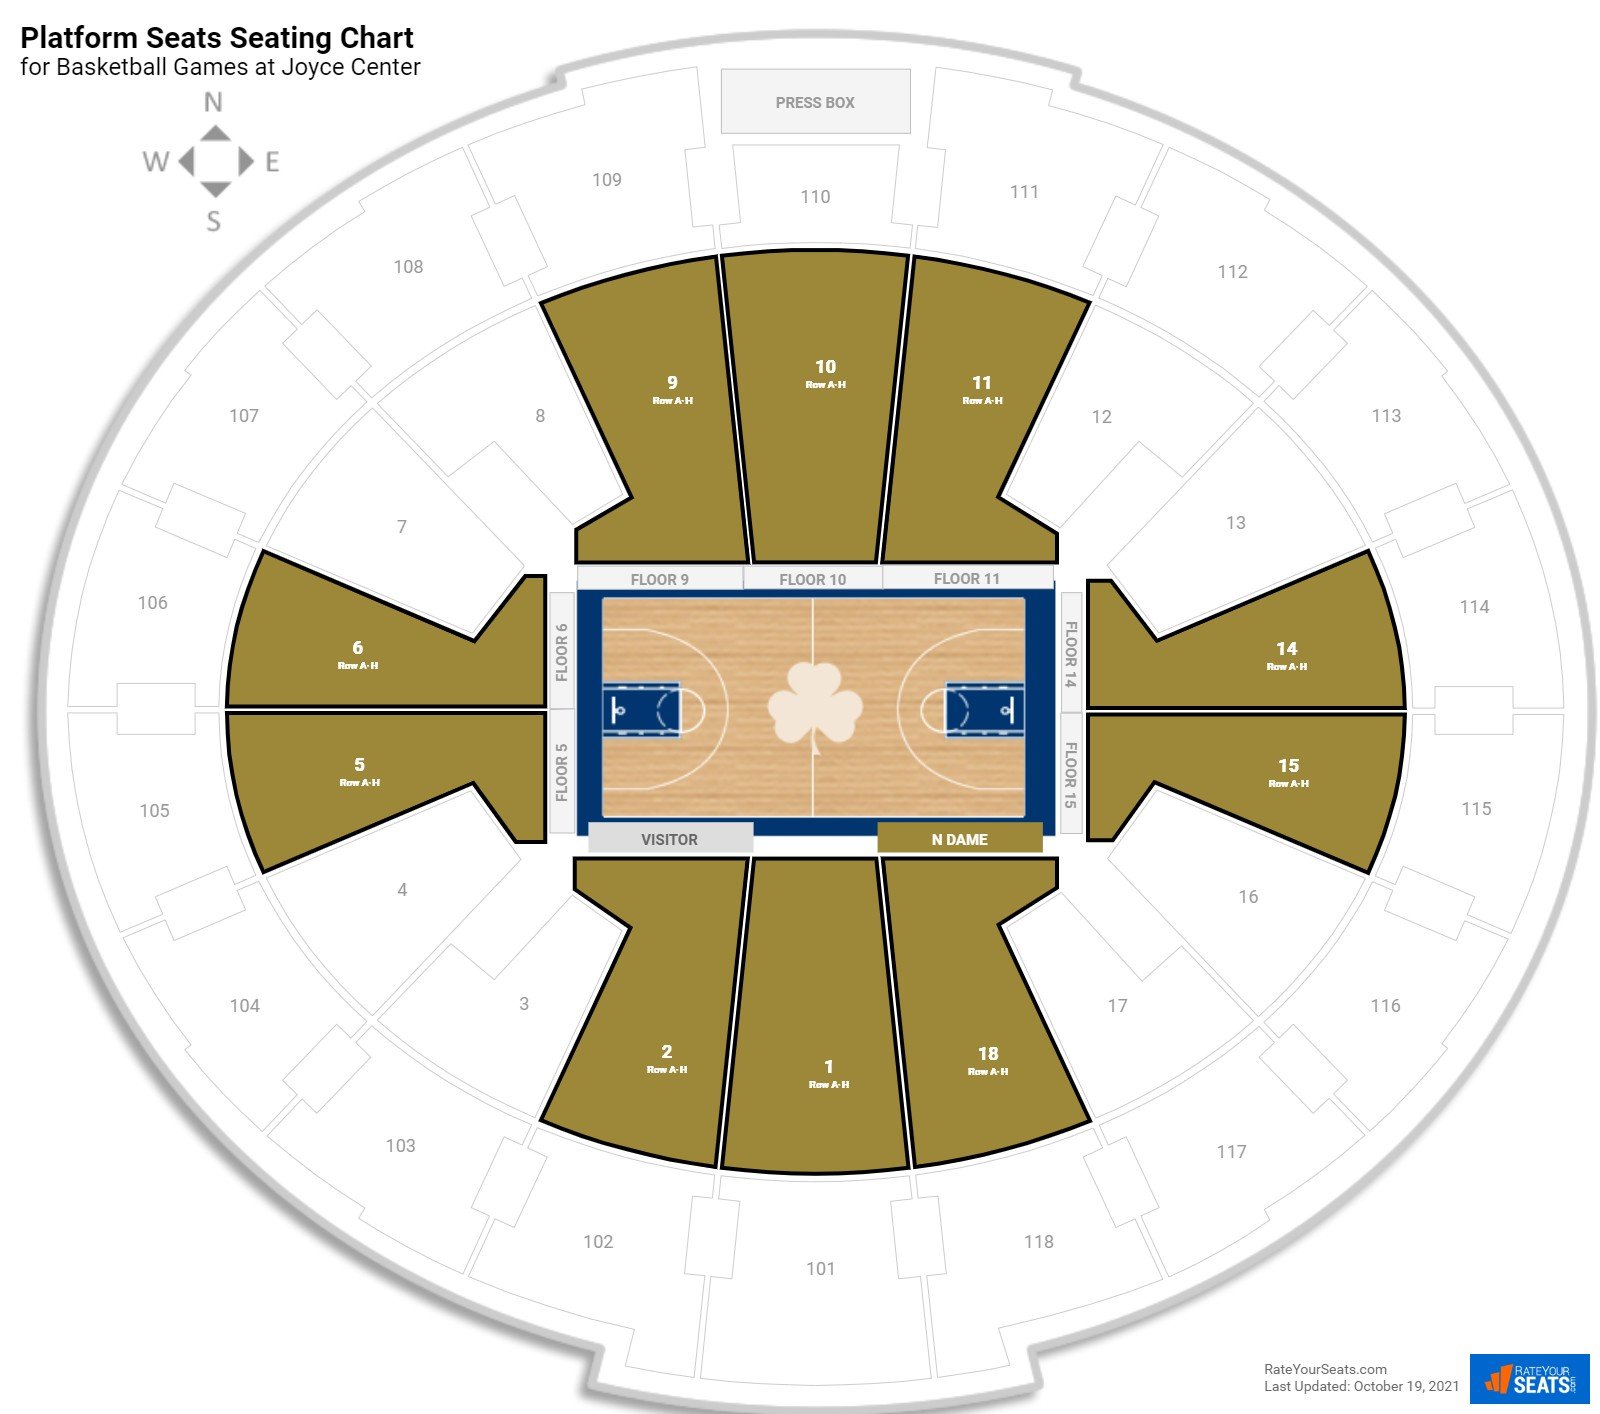 Basketball Platform Seats Seating Chart at Joyce Center